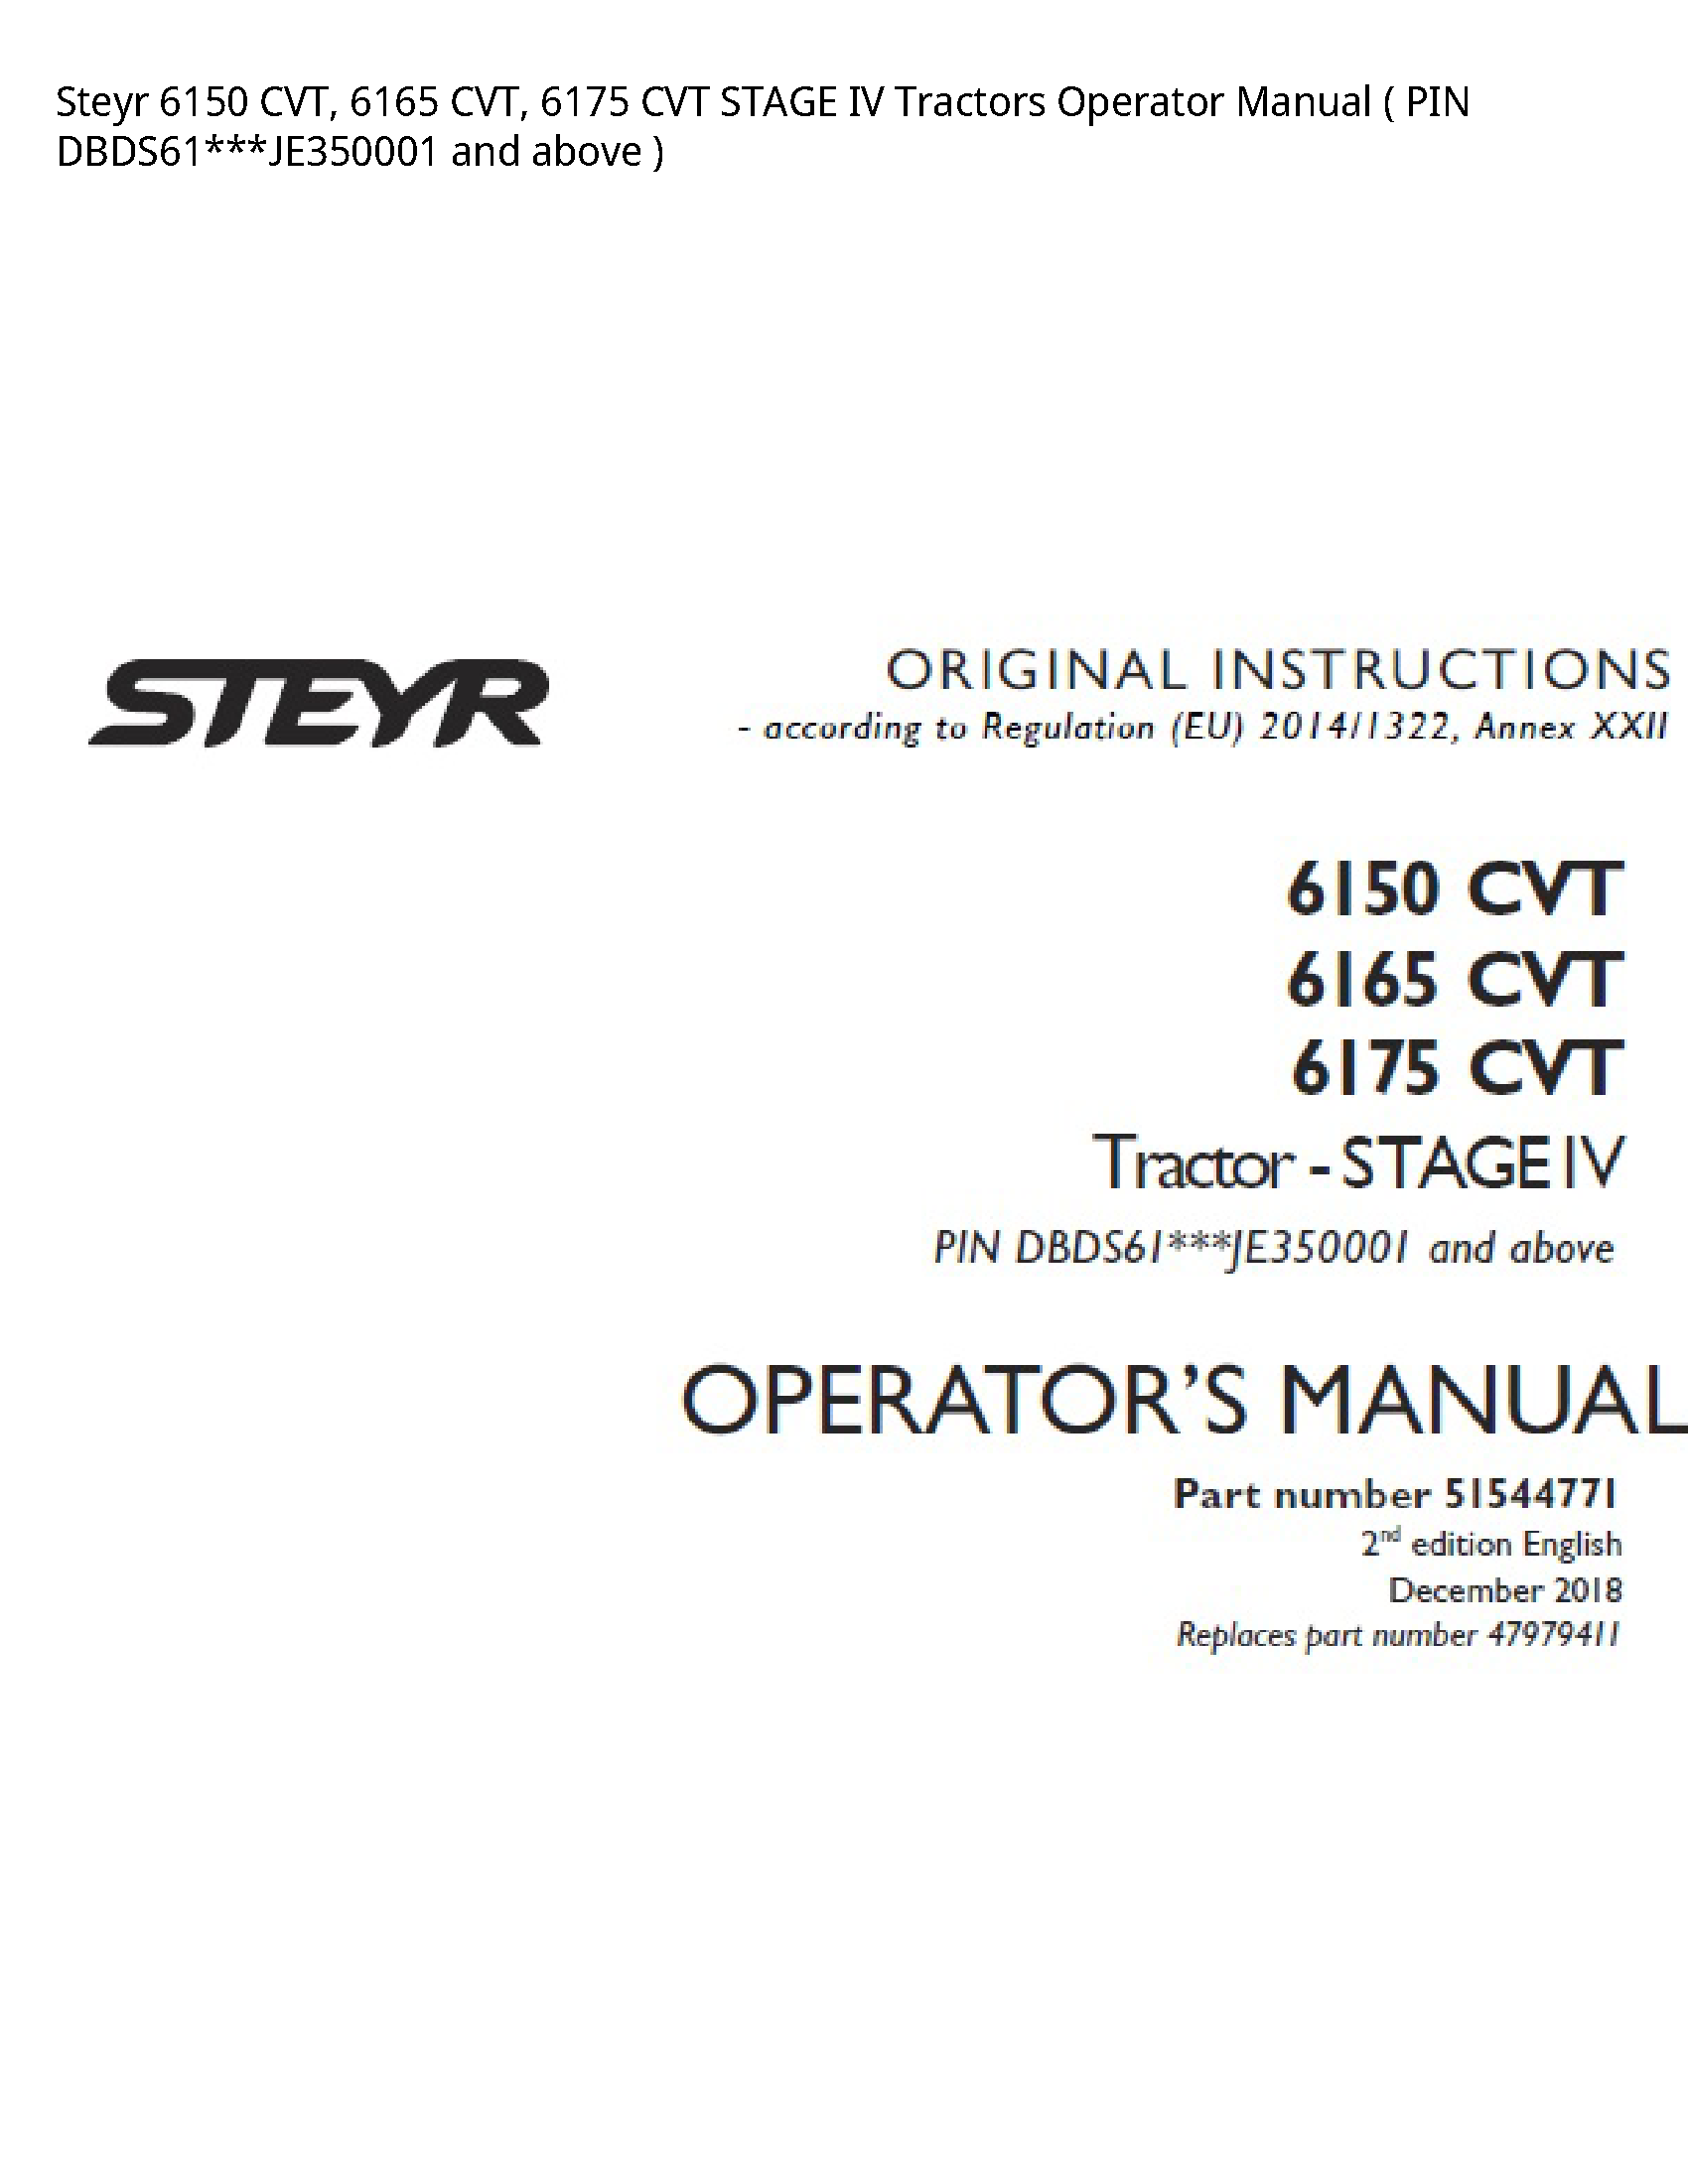 Steyr 6150 CVT manual